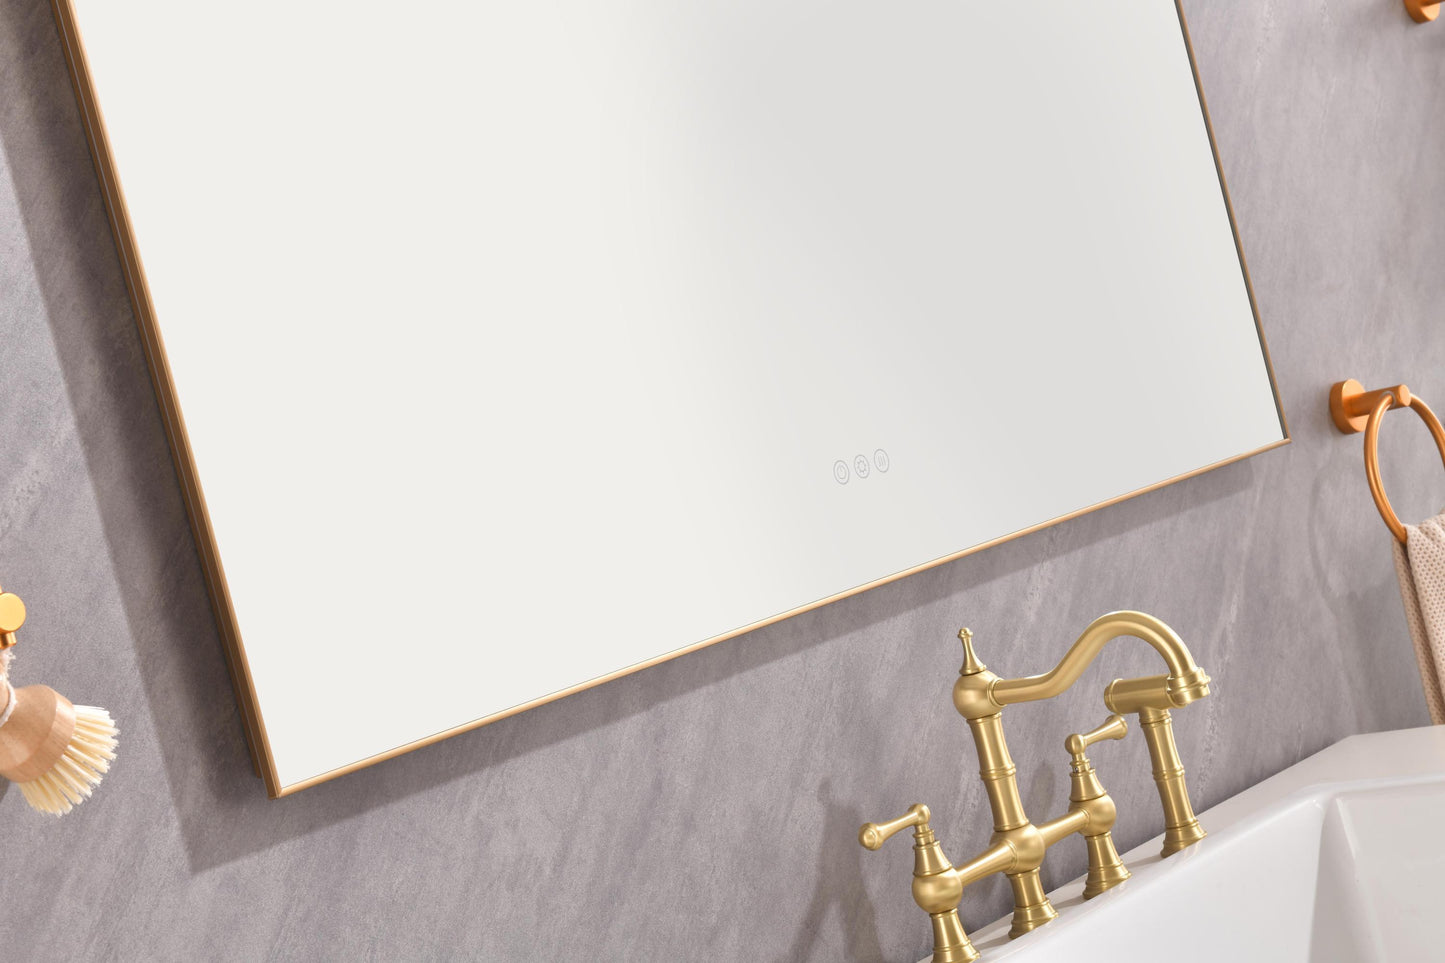 48x 36Inch LED Mirror Bathroom Vanity Mirror with Back Light, Wall Mount Anti-Fog Memory Large Adjustable Vanity Mirror